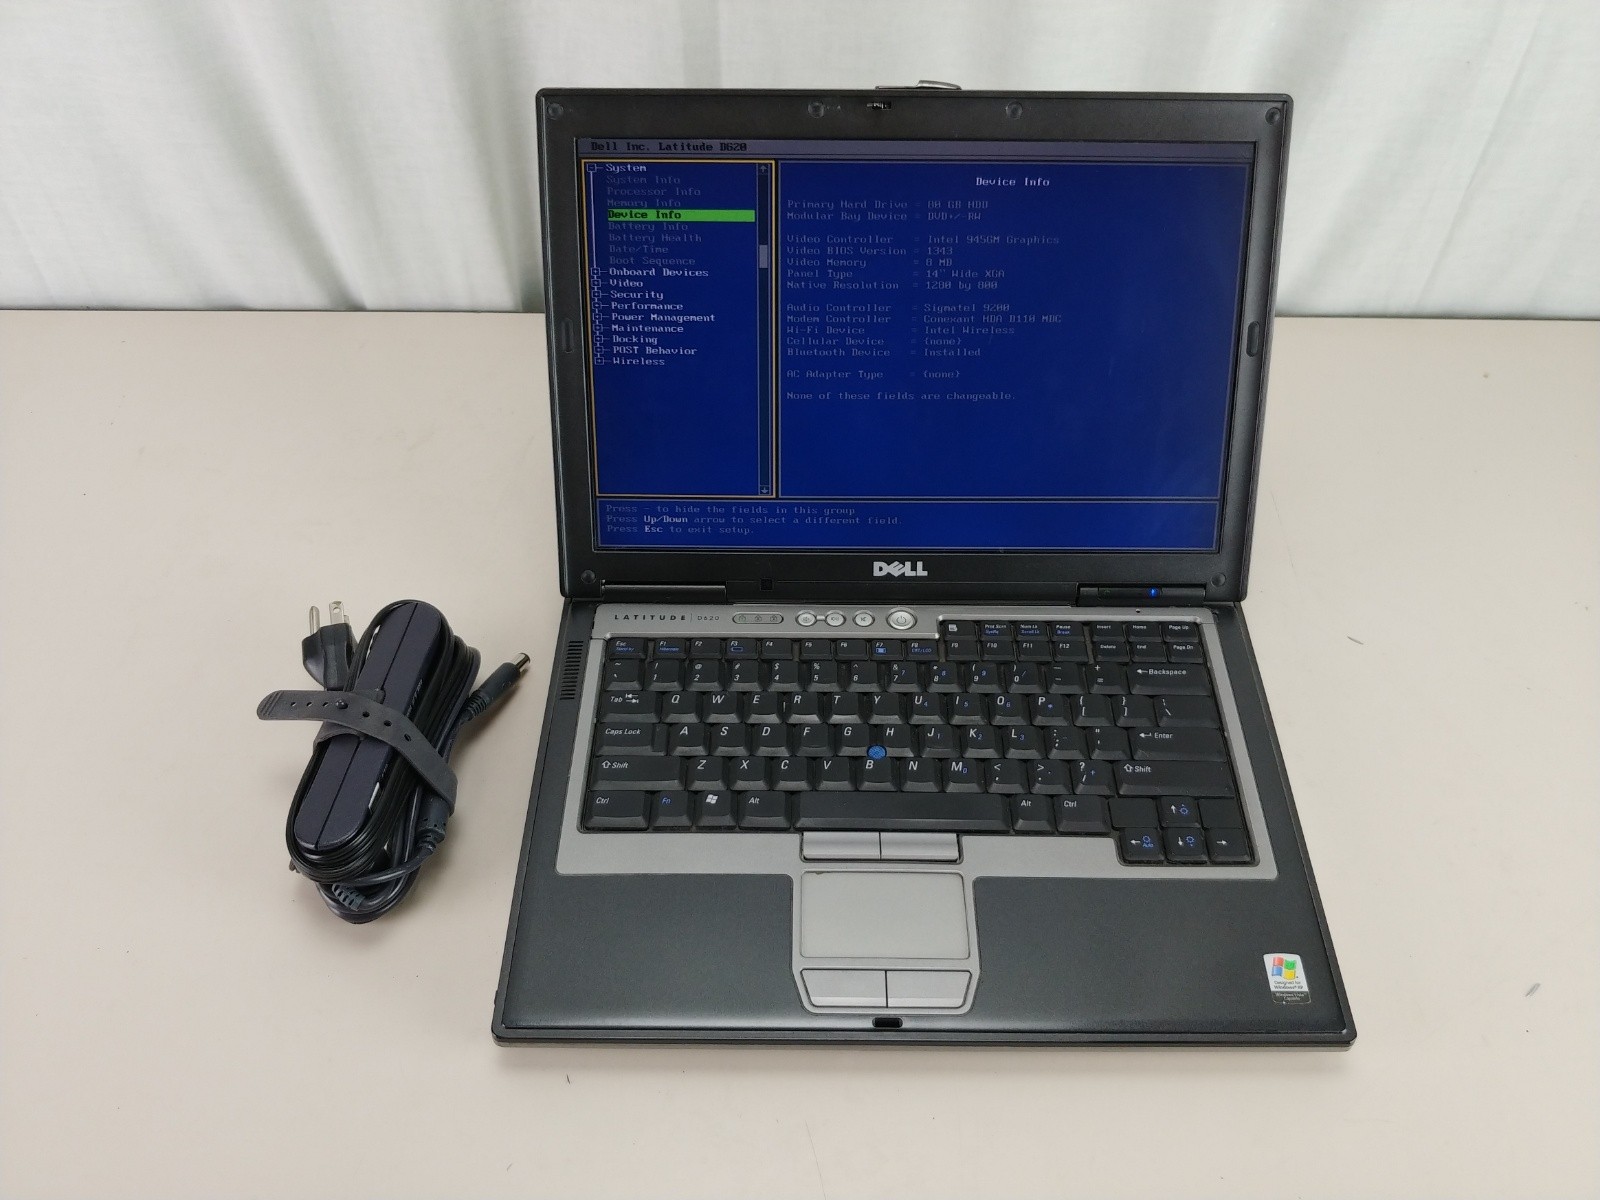 Dell D620 Windows 98 Drivers